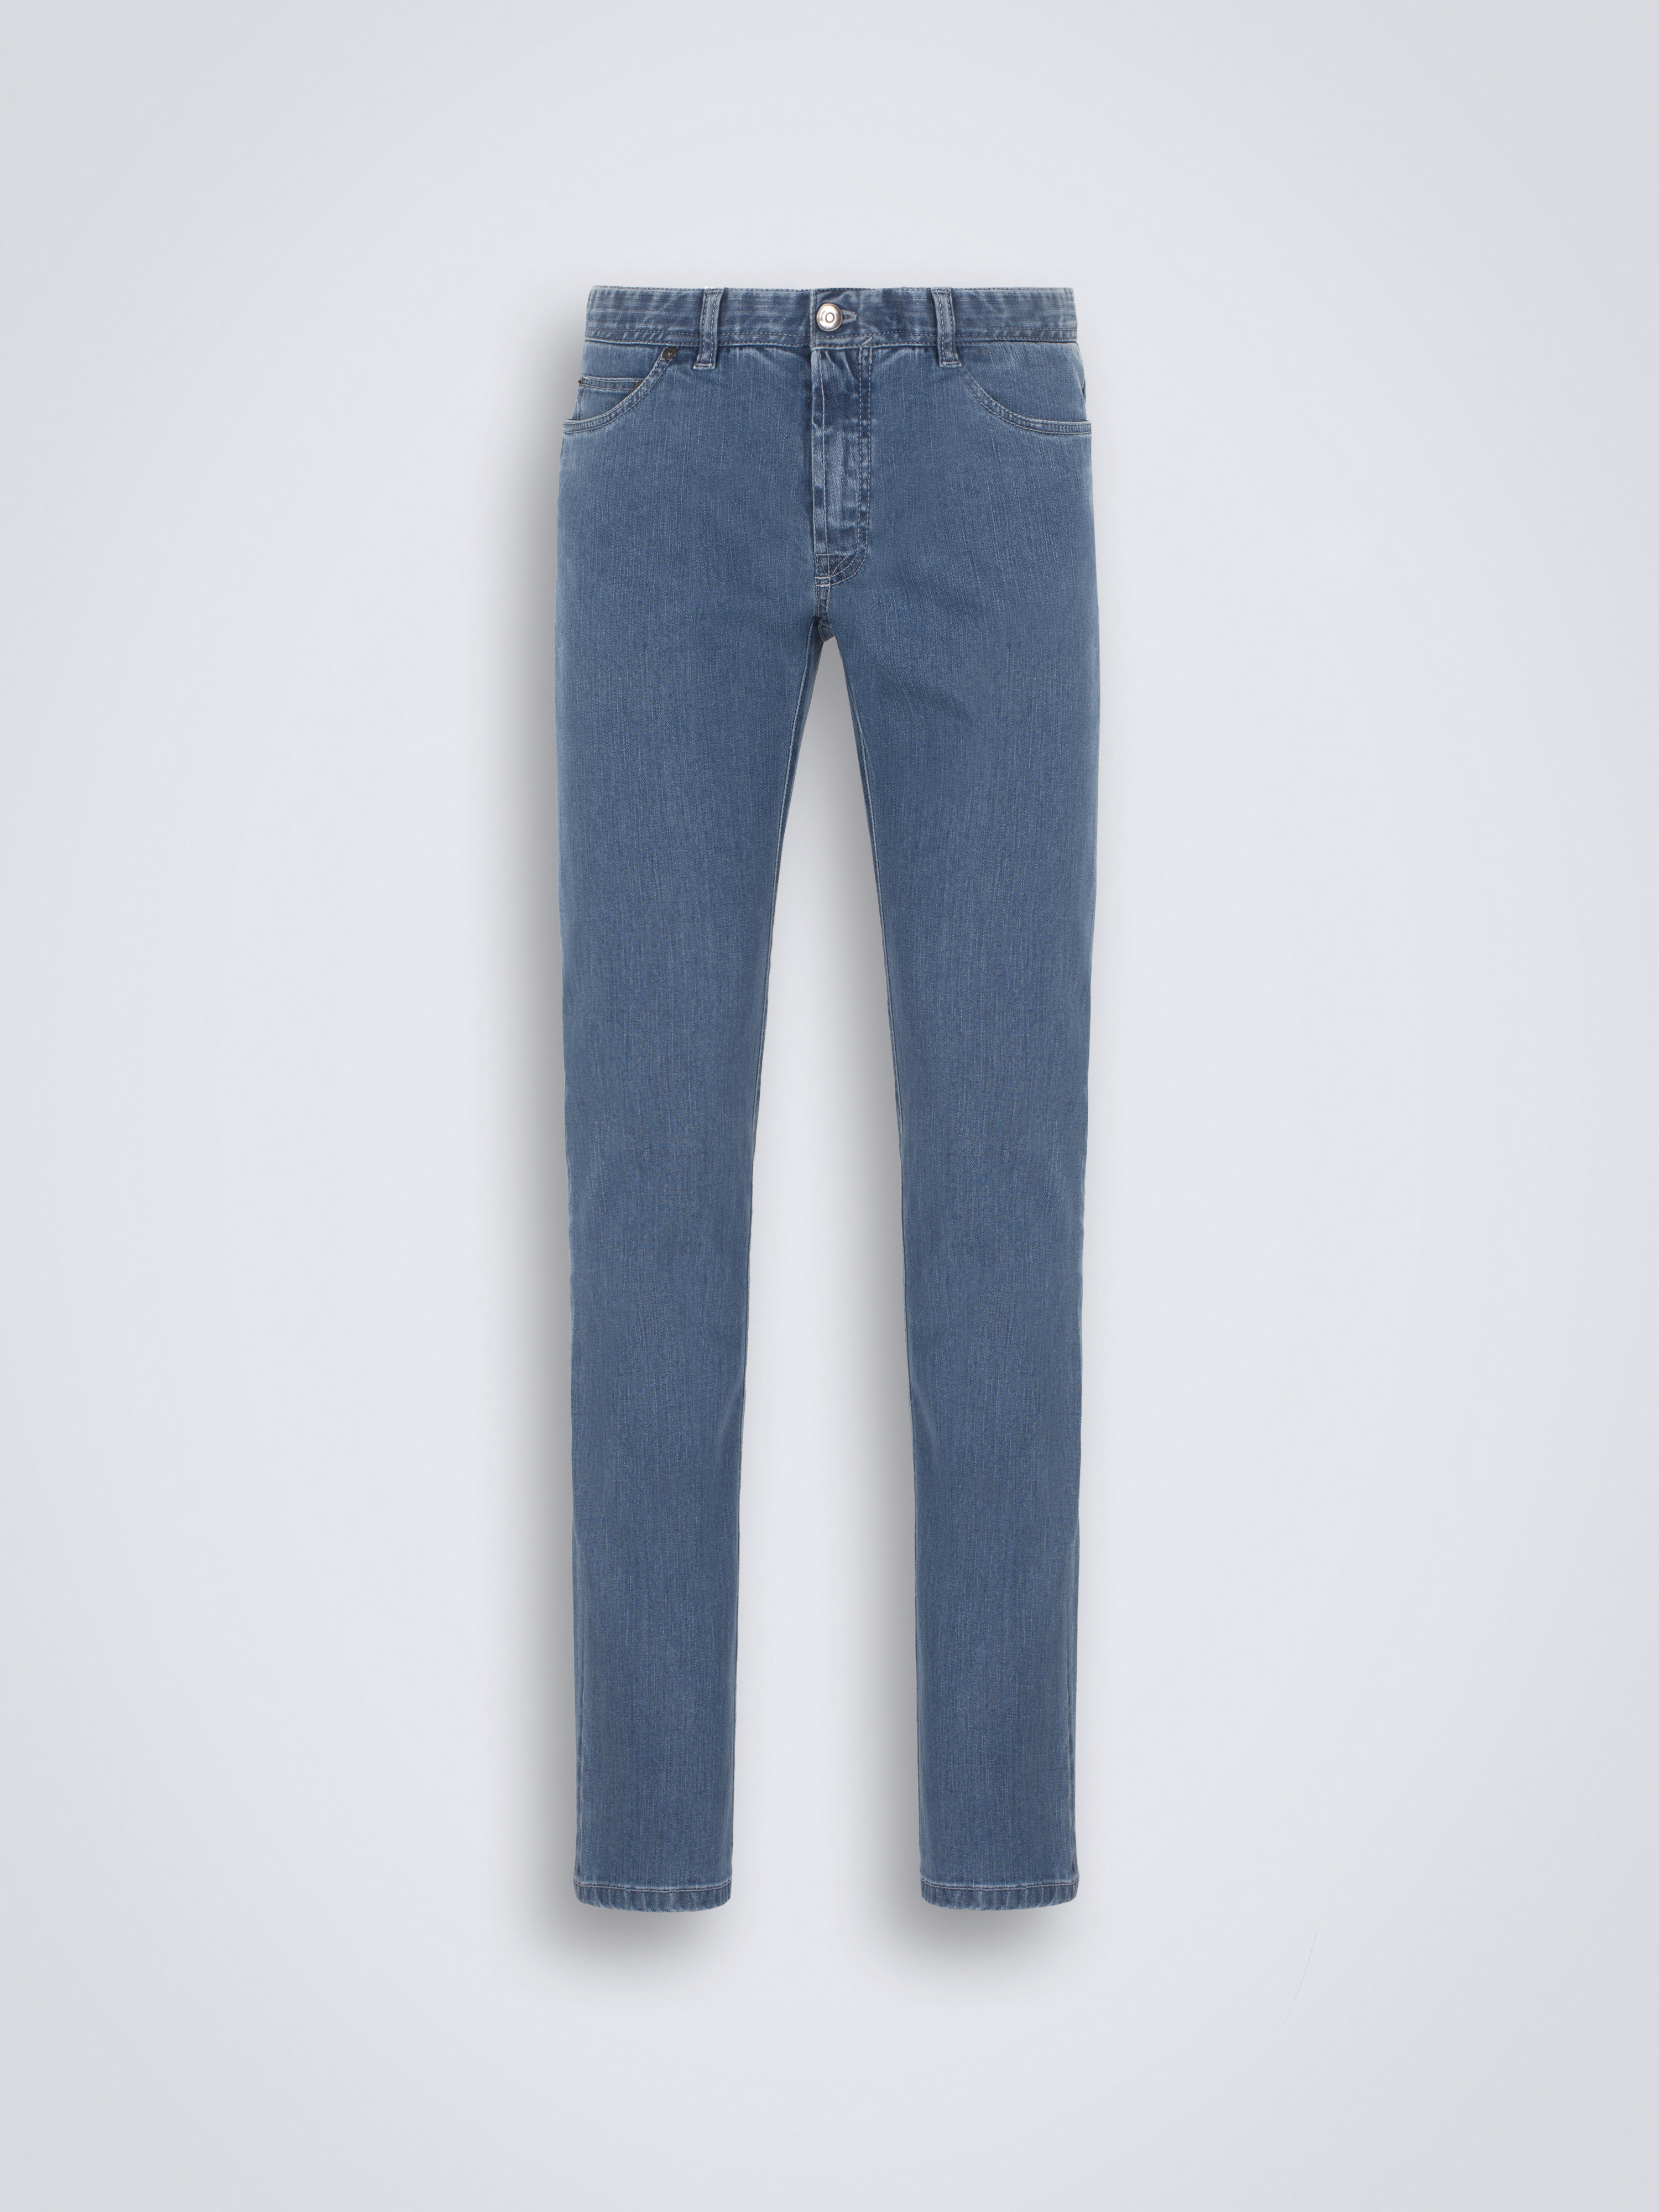 Essential light blue regular fit jeans